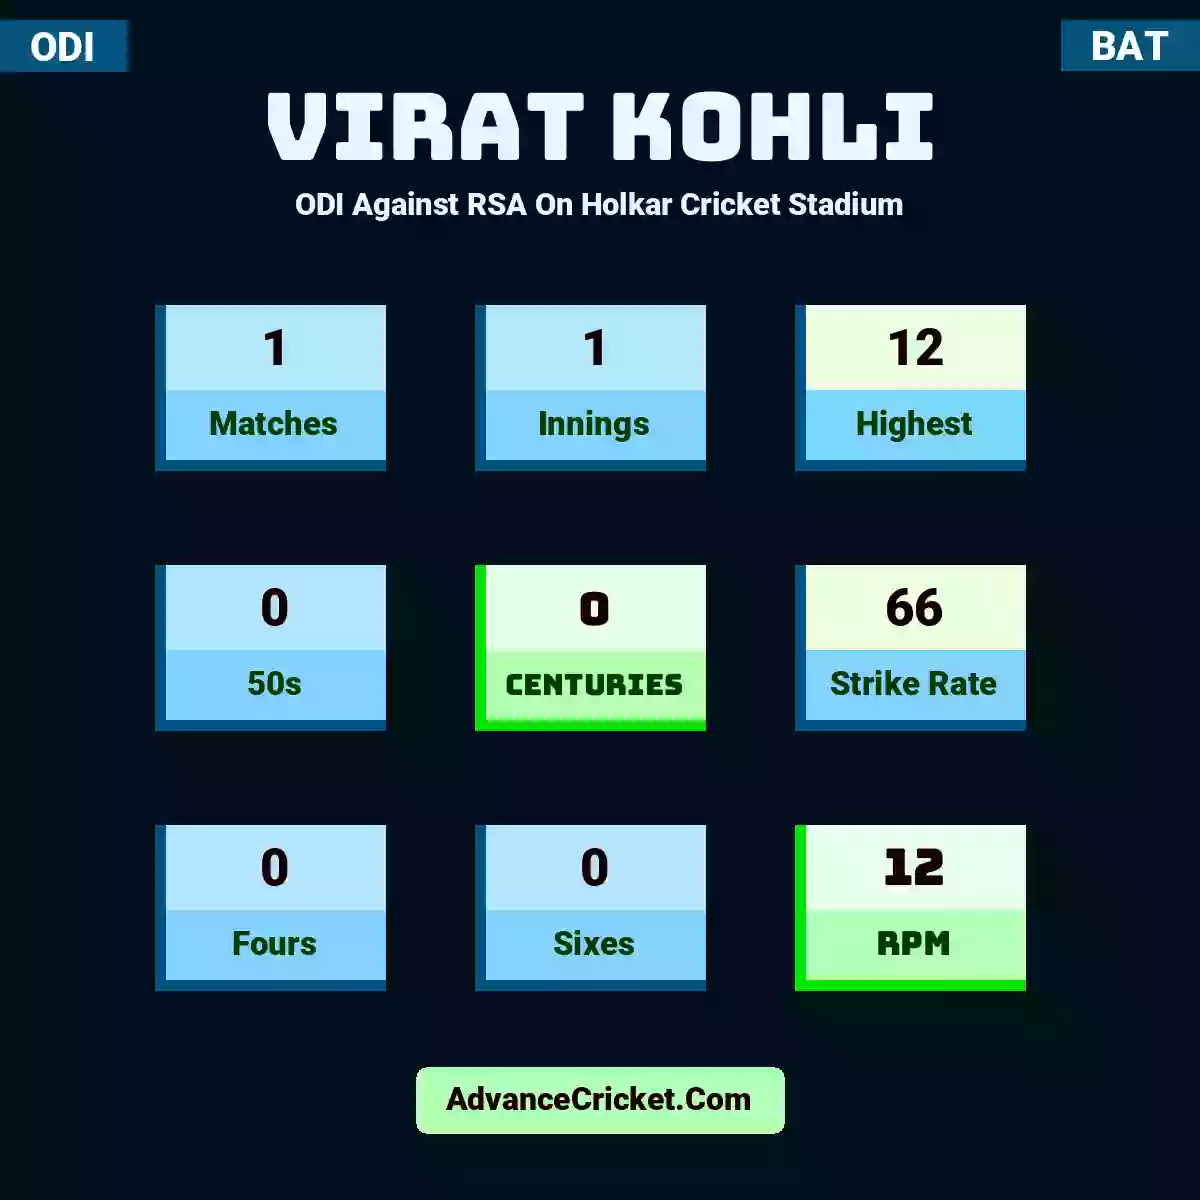 Virat Kohli ODI  Against RSA On Holkar Cricket Stadium, Virat Kohli played 1 matches, scored 12 runs as highest, 0 half-centuries, and 0 centuries, with a strike rate of 66. V.Kohli hit 0 fours and 0 sixes, with an RPM of 12.